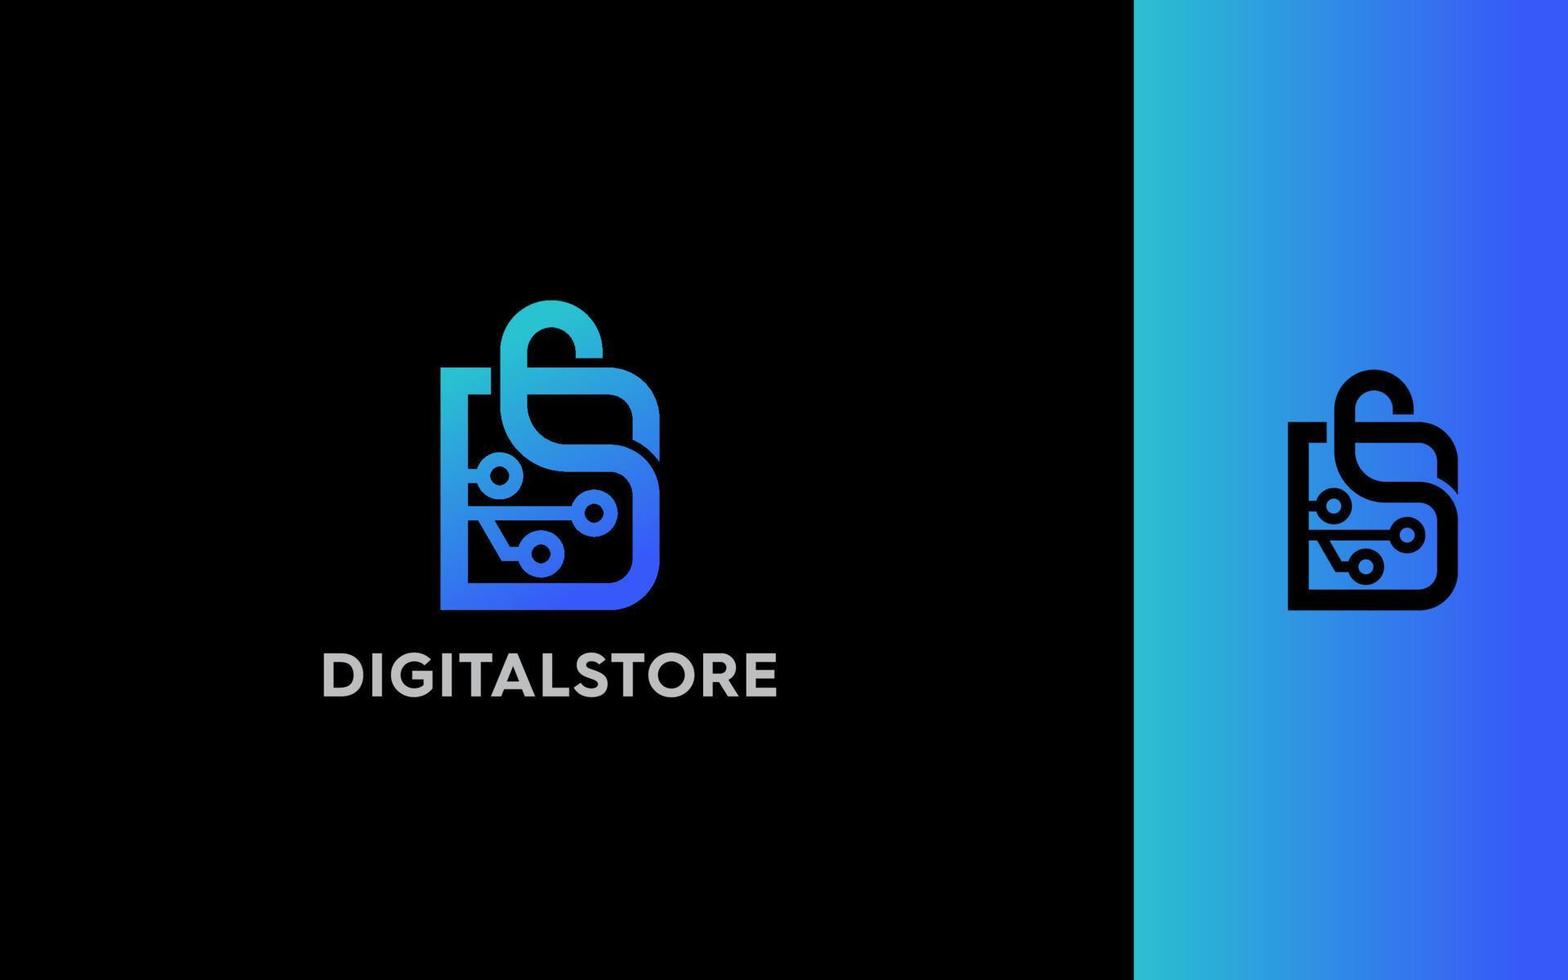 Digital Store modern logo vector